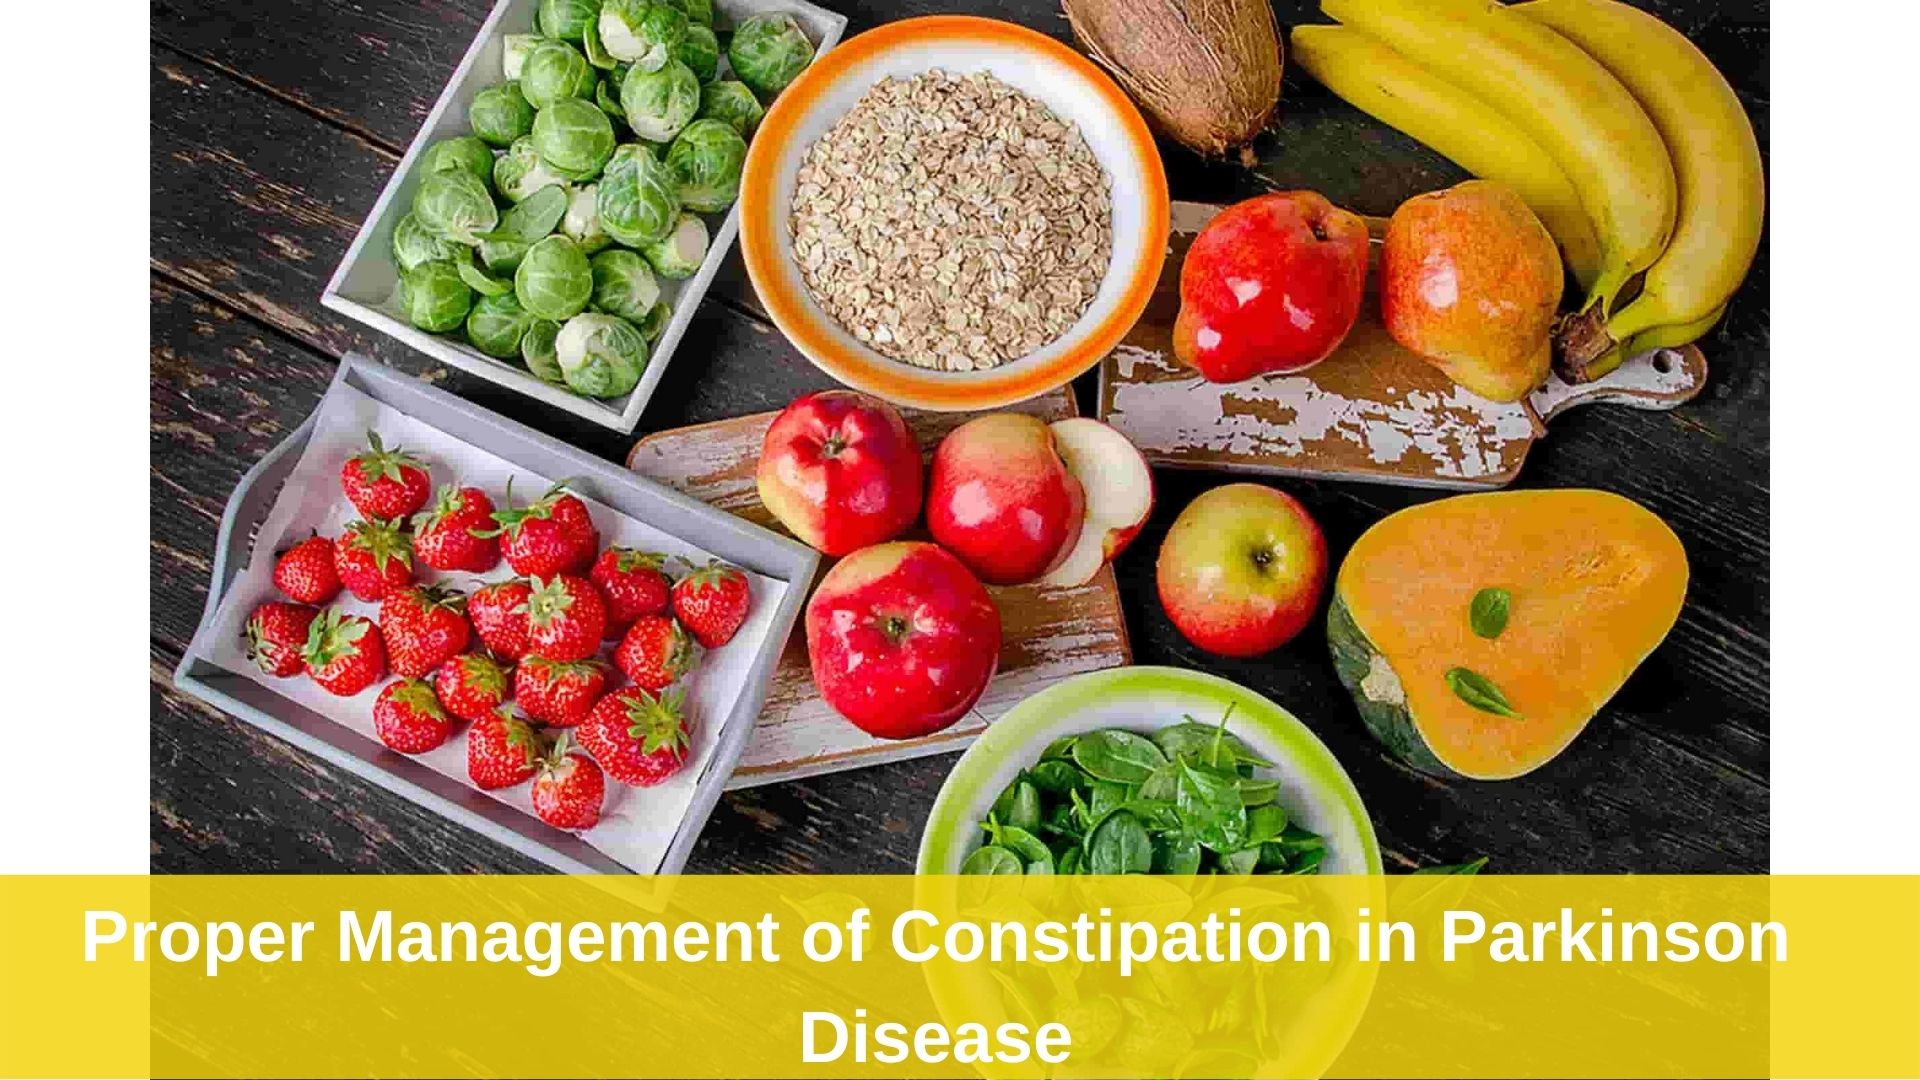 Proper Management of Constipation in Parkinson Disease